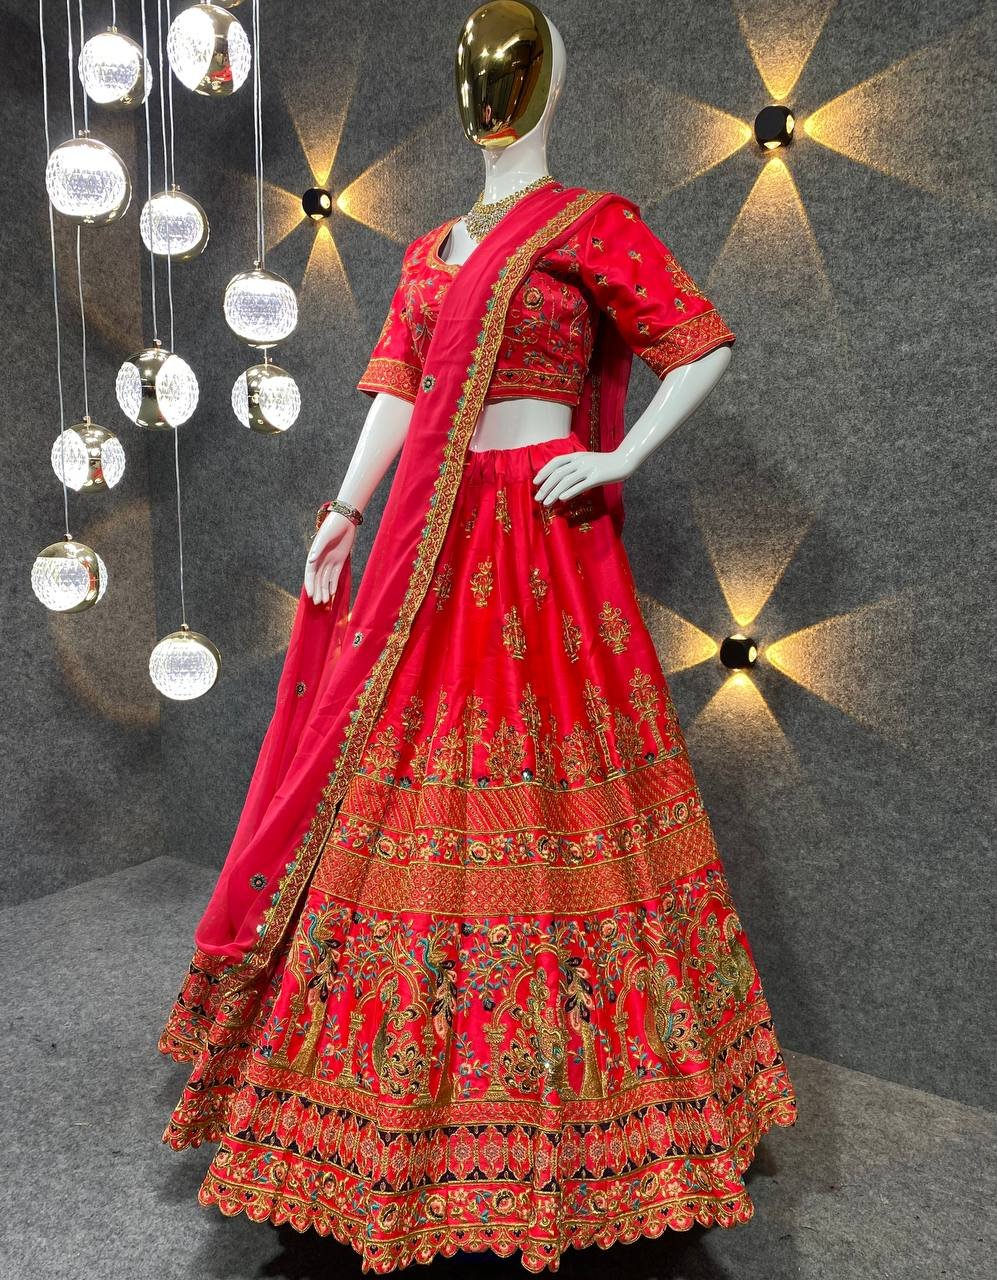 Mesmerizing Green Designer Bridal Lehenga Choli | Buy Indian Wear